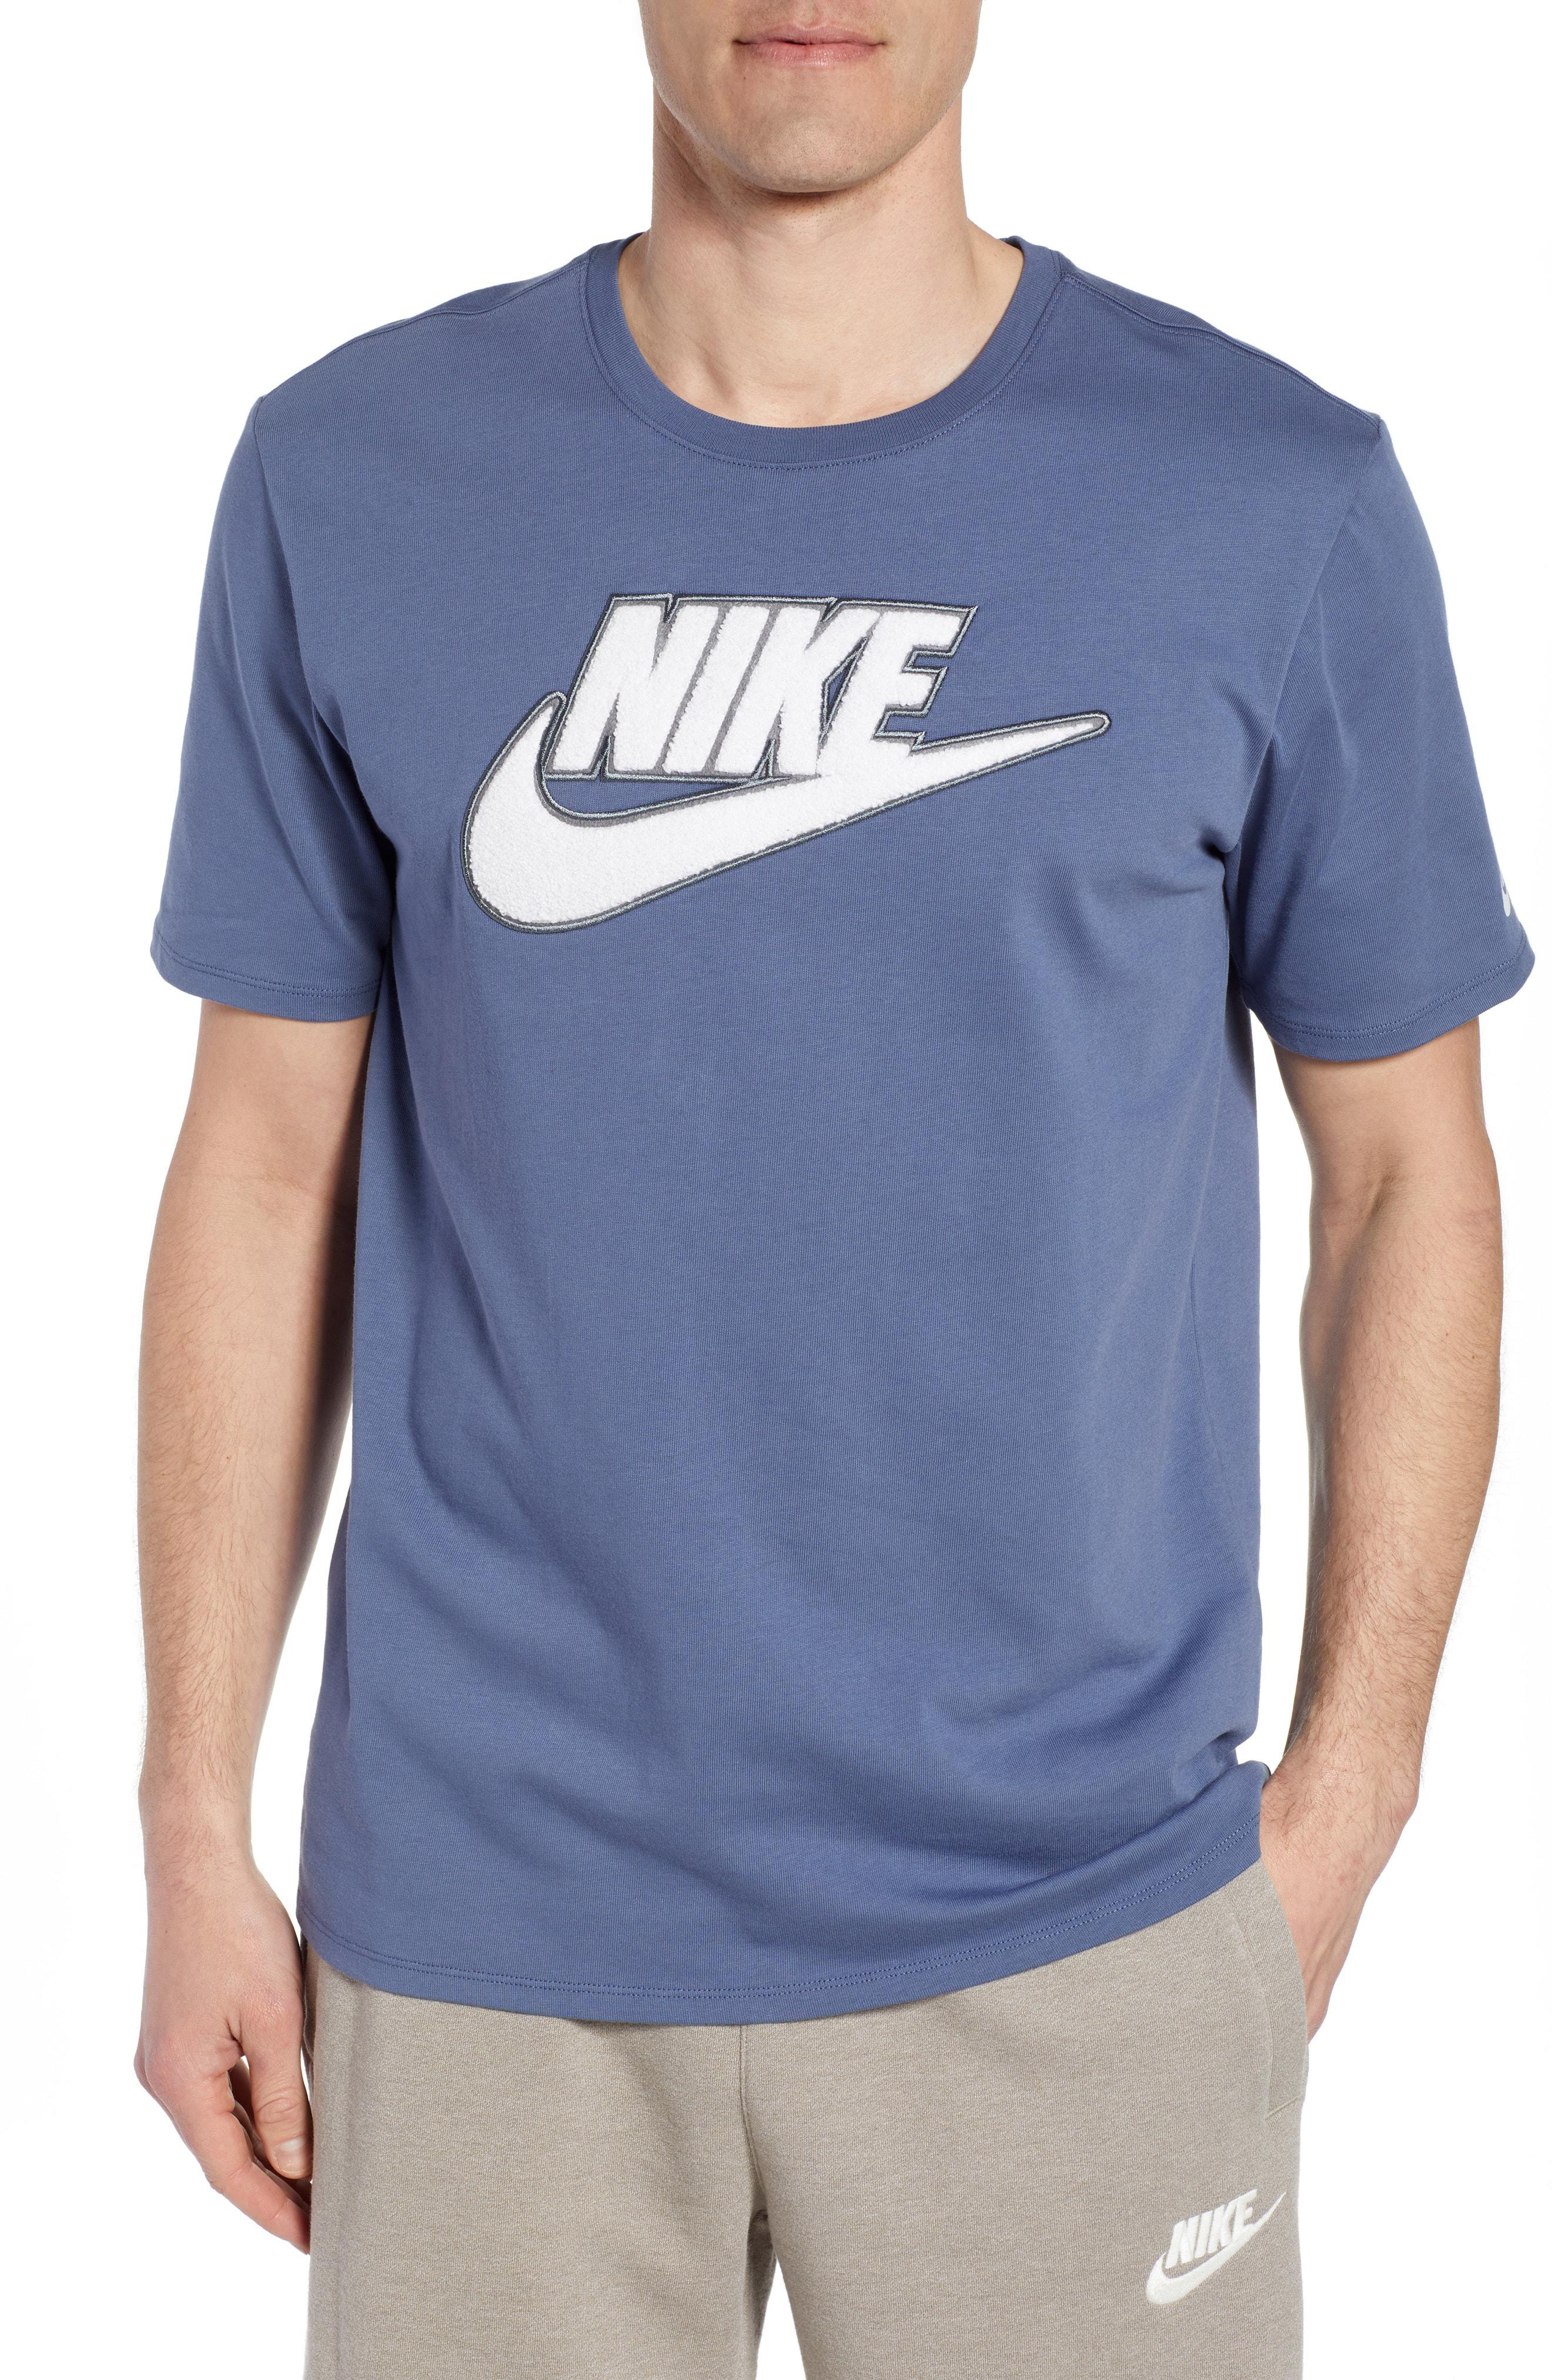 Nike Cotton Innovation Logo T-shirt in Blue for Men - Lyst